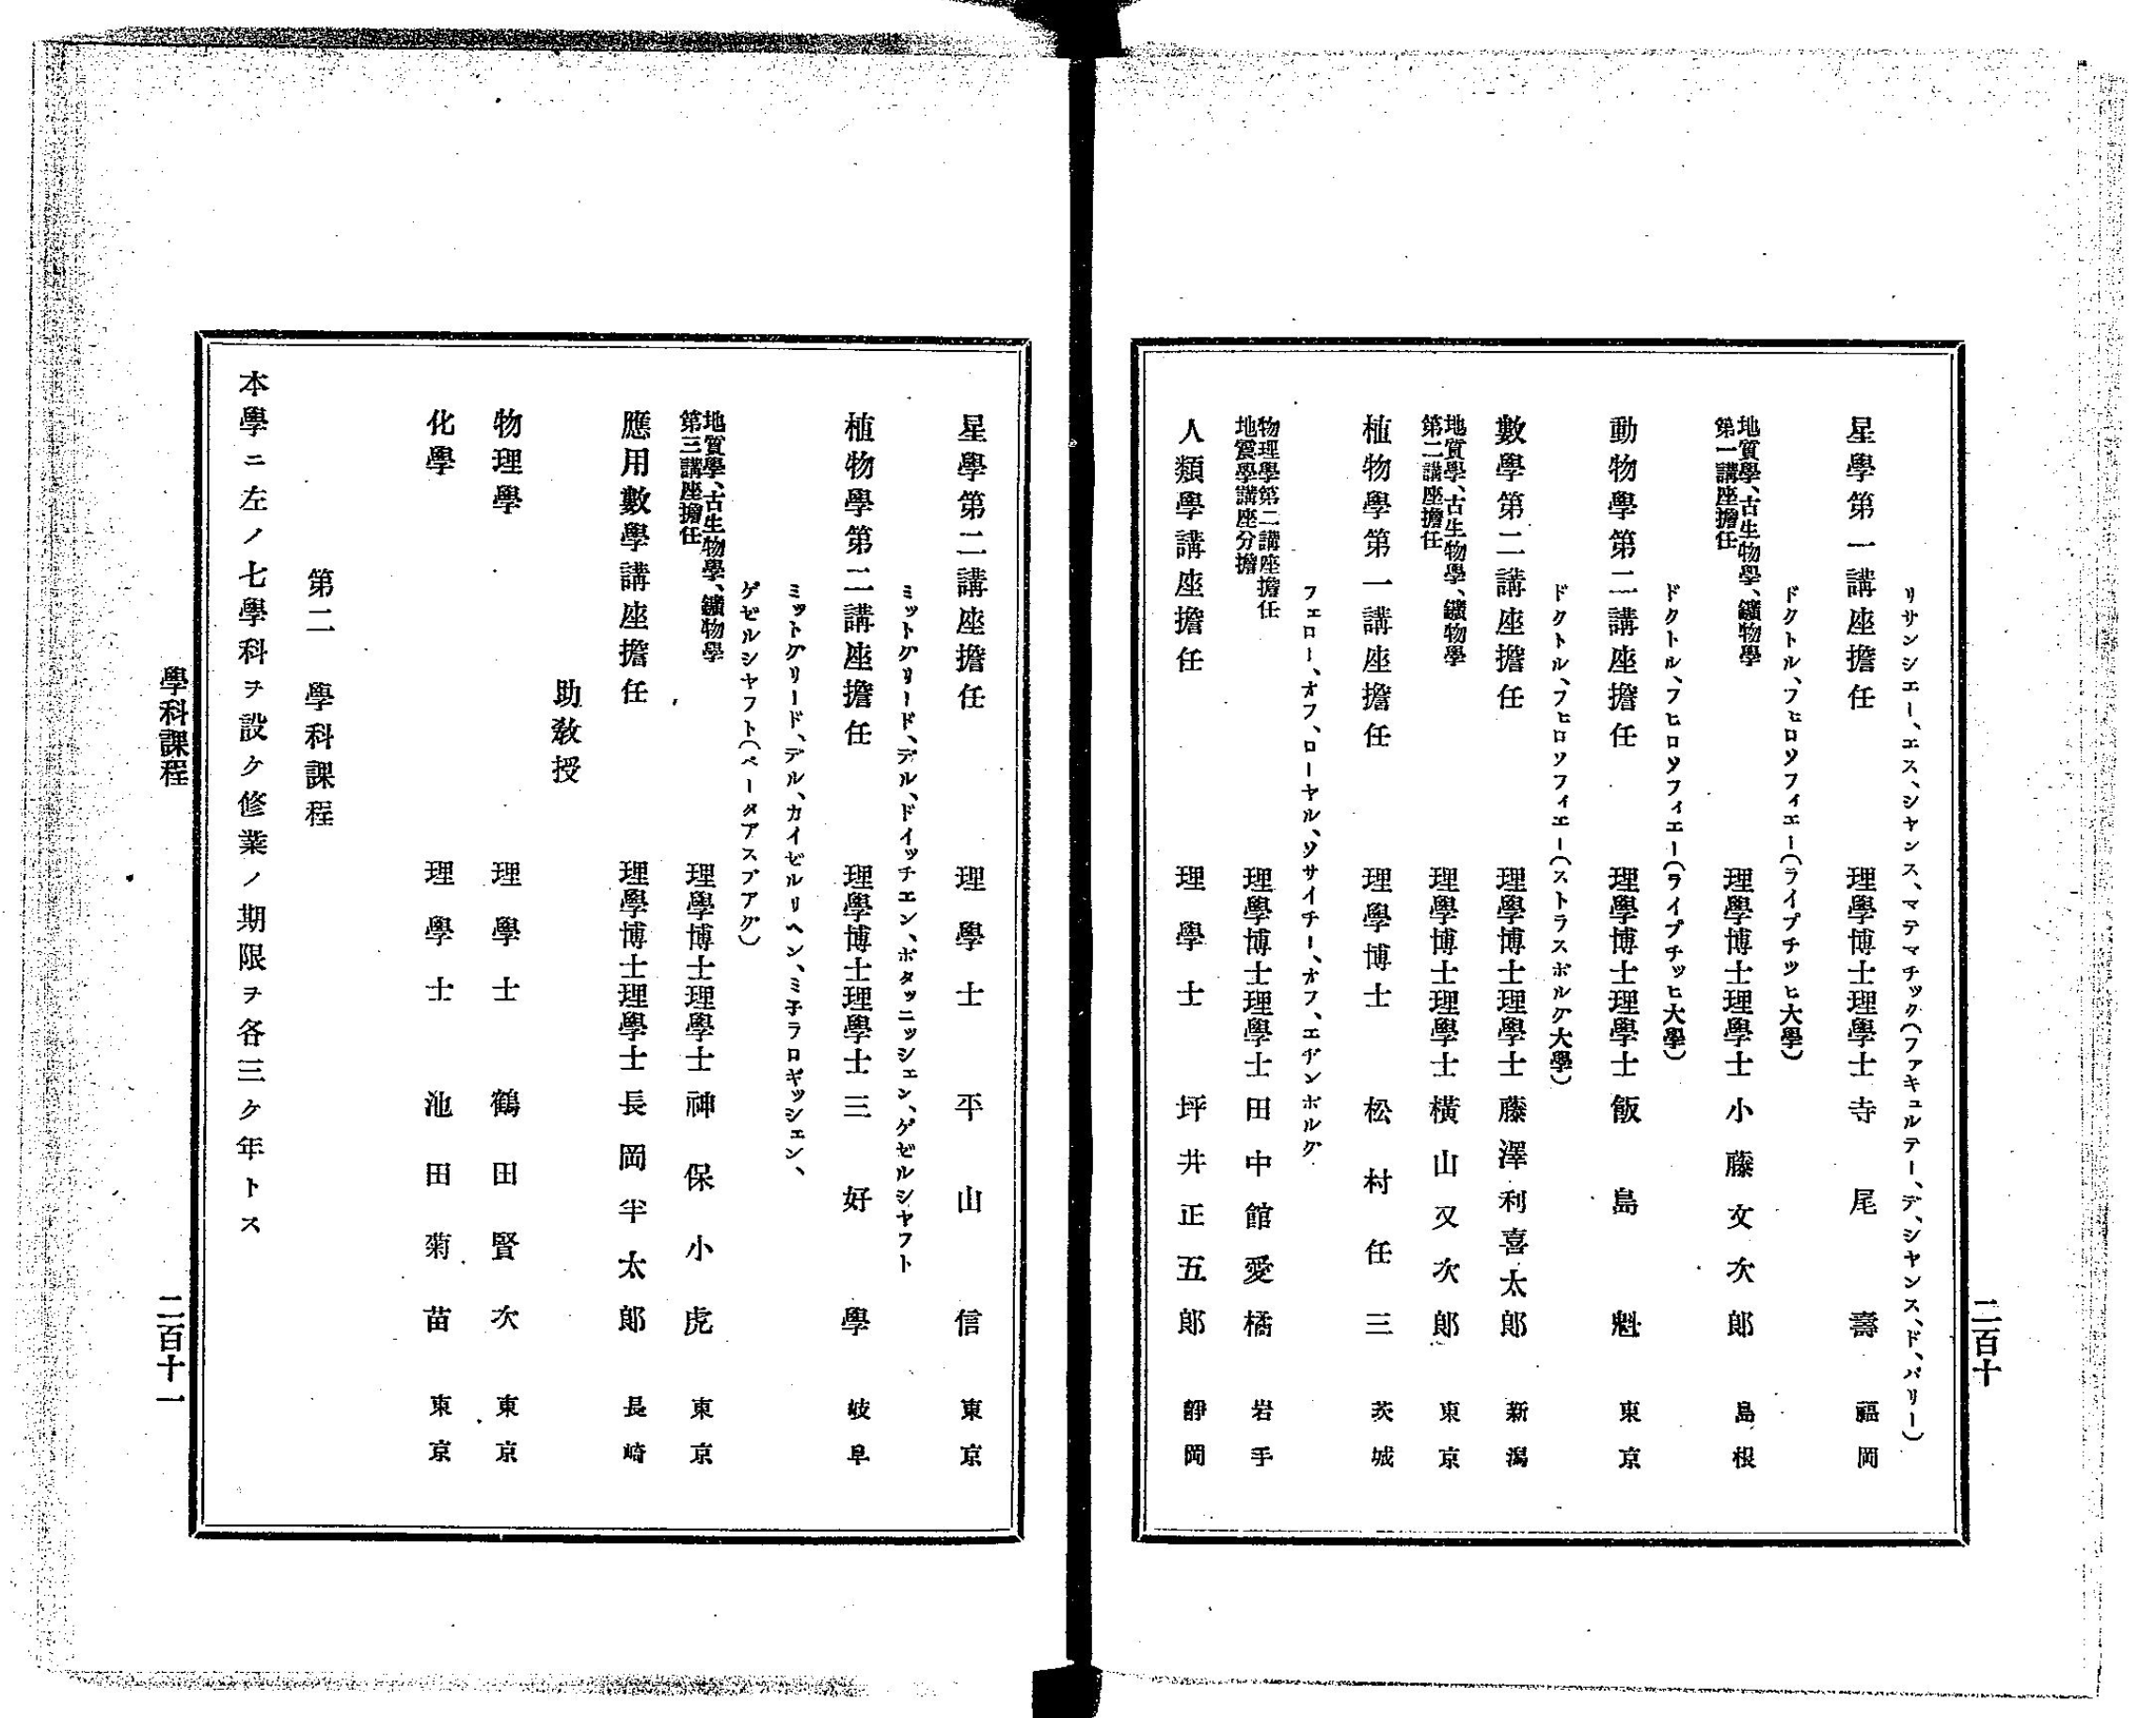 THERMODYNAMIC NOTES (No. VIII)が出版された年のもの。鶴田賢次は助教授になっている。<br>[東京帝国大学一覧 明治29-30年](https://dl.ndl.go.jp/info:ndljp/pid/813173/111)より